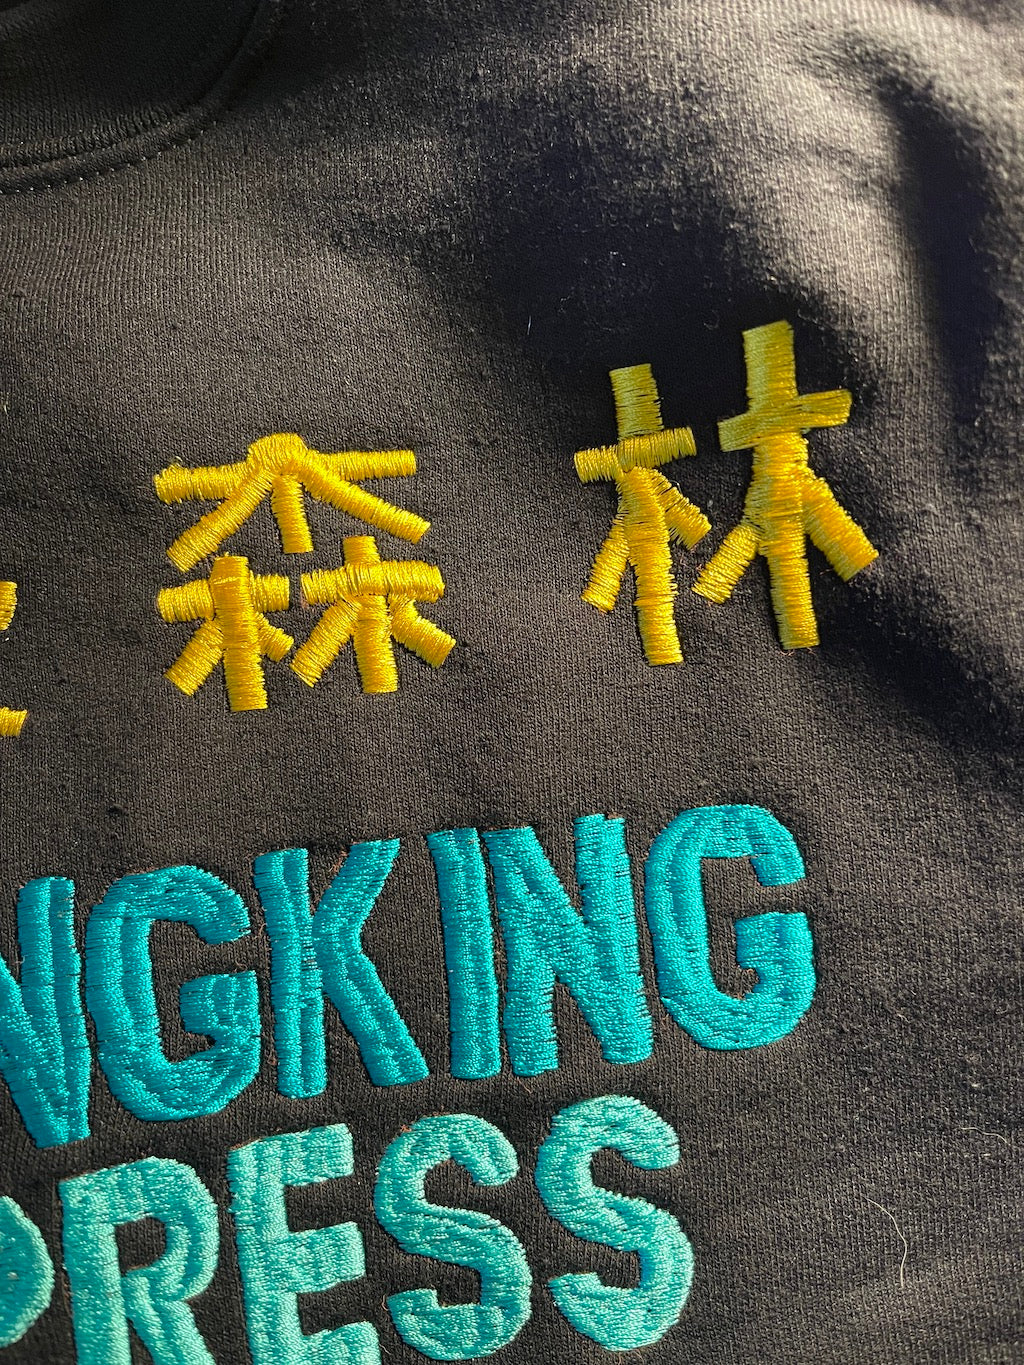 Chungking Express Sweatshirt